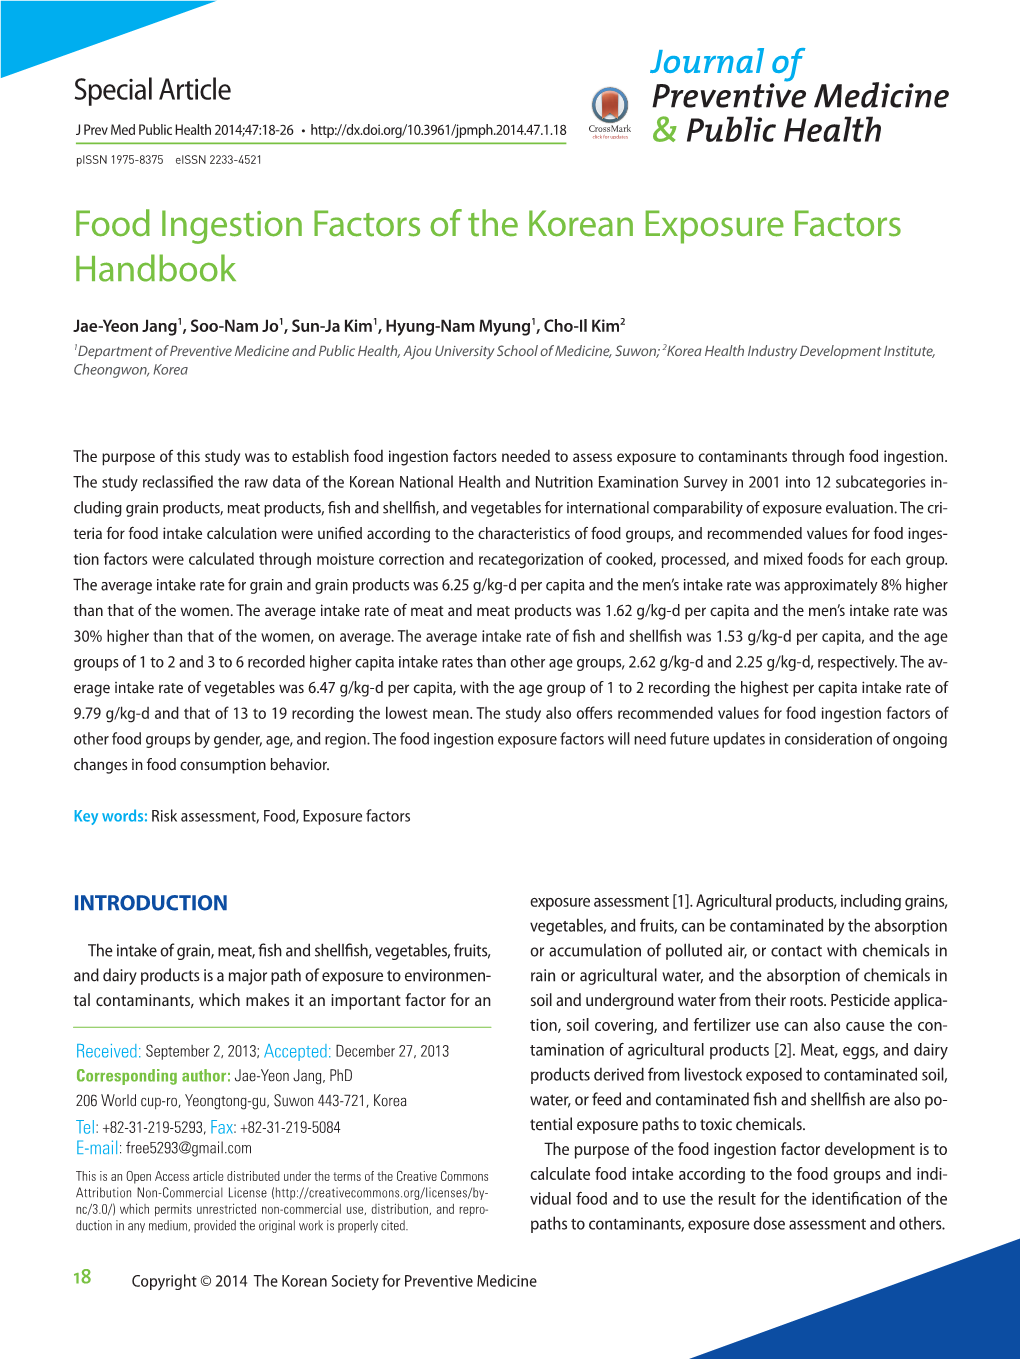 Food Ingestion Factors of the Korean Exposure Factors Handbook